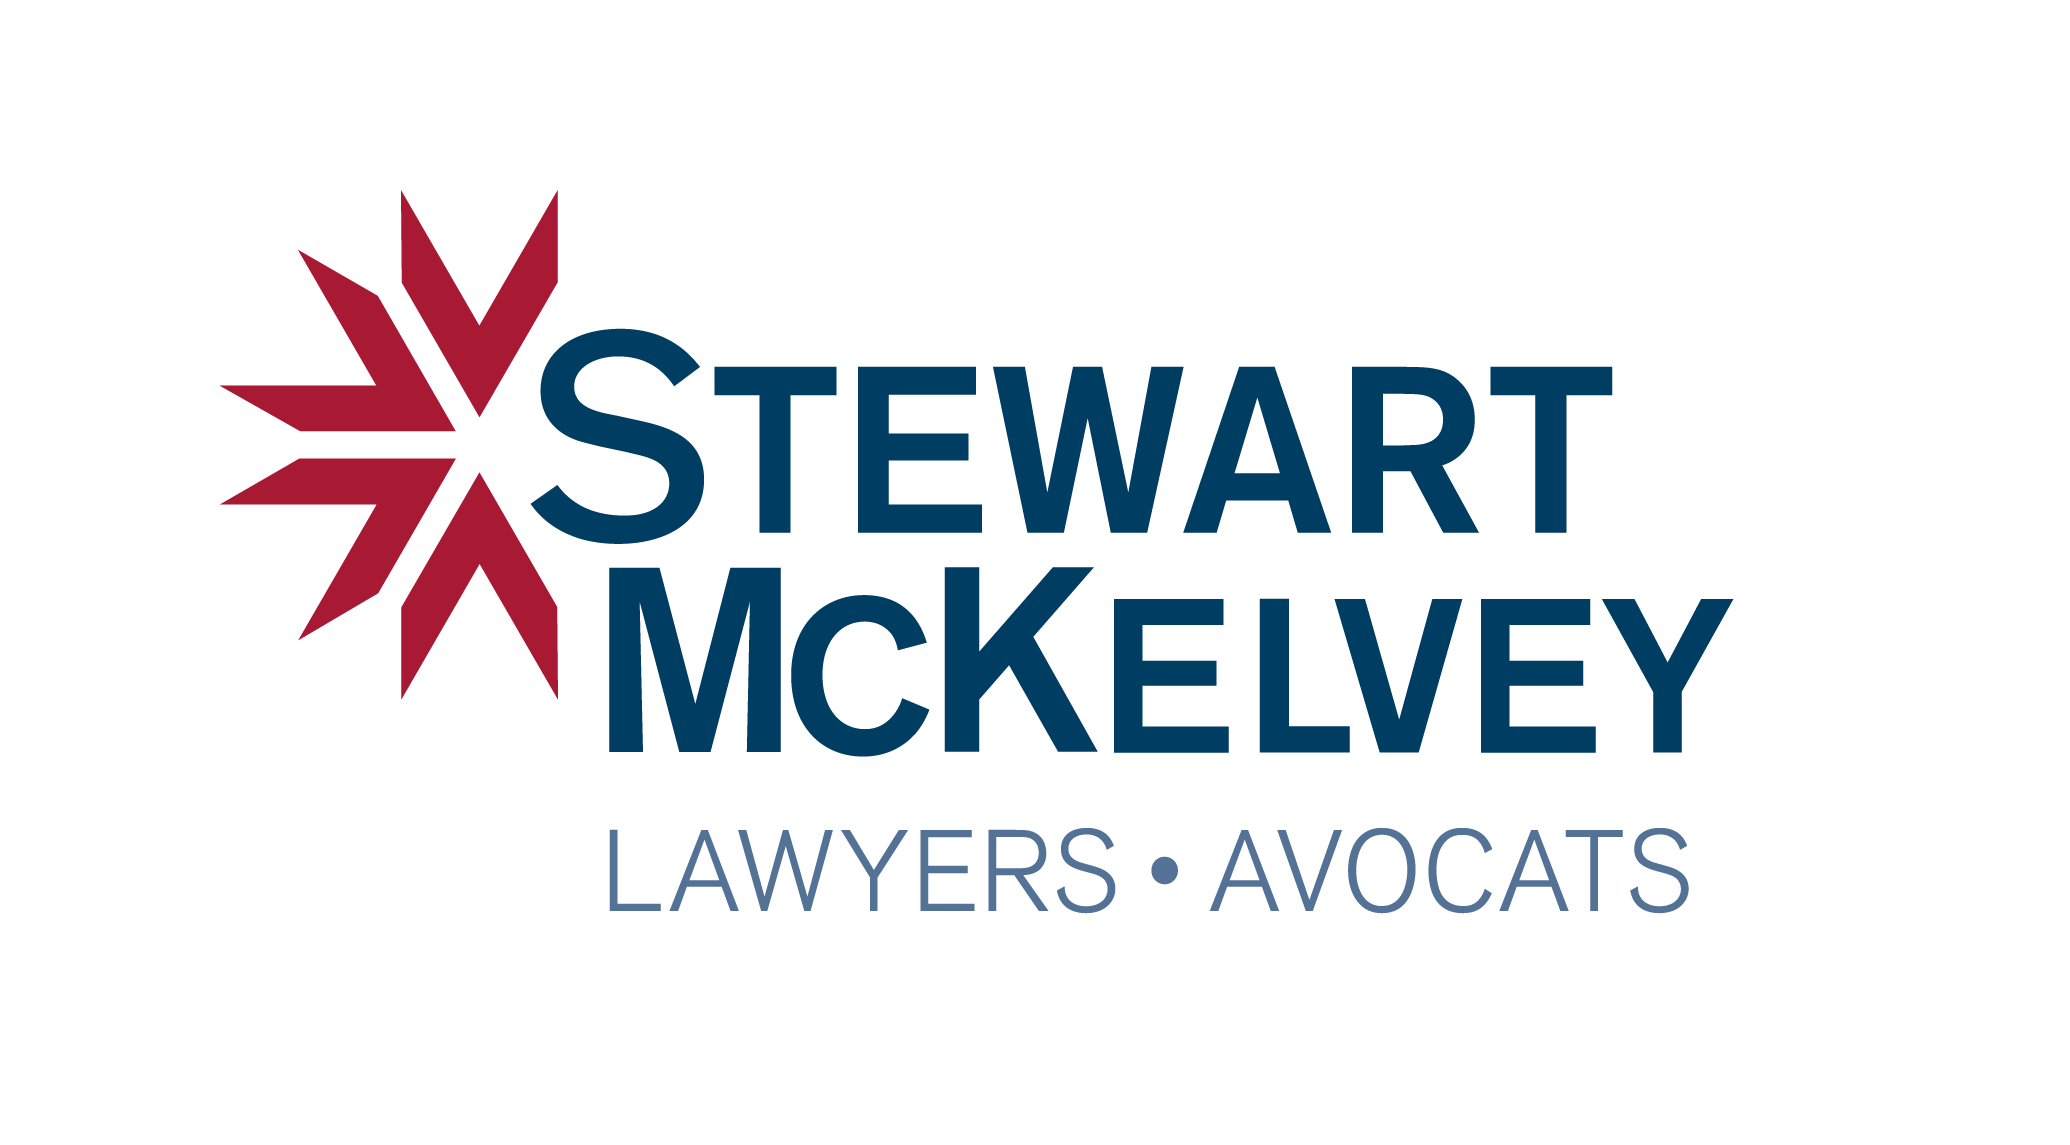 Stewart McKelvey Lawyers Advocats Logo